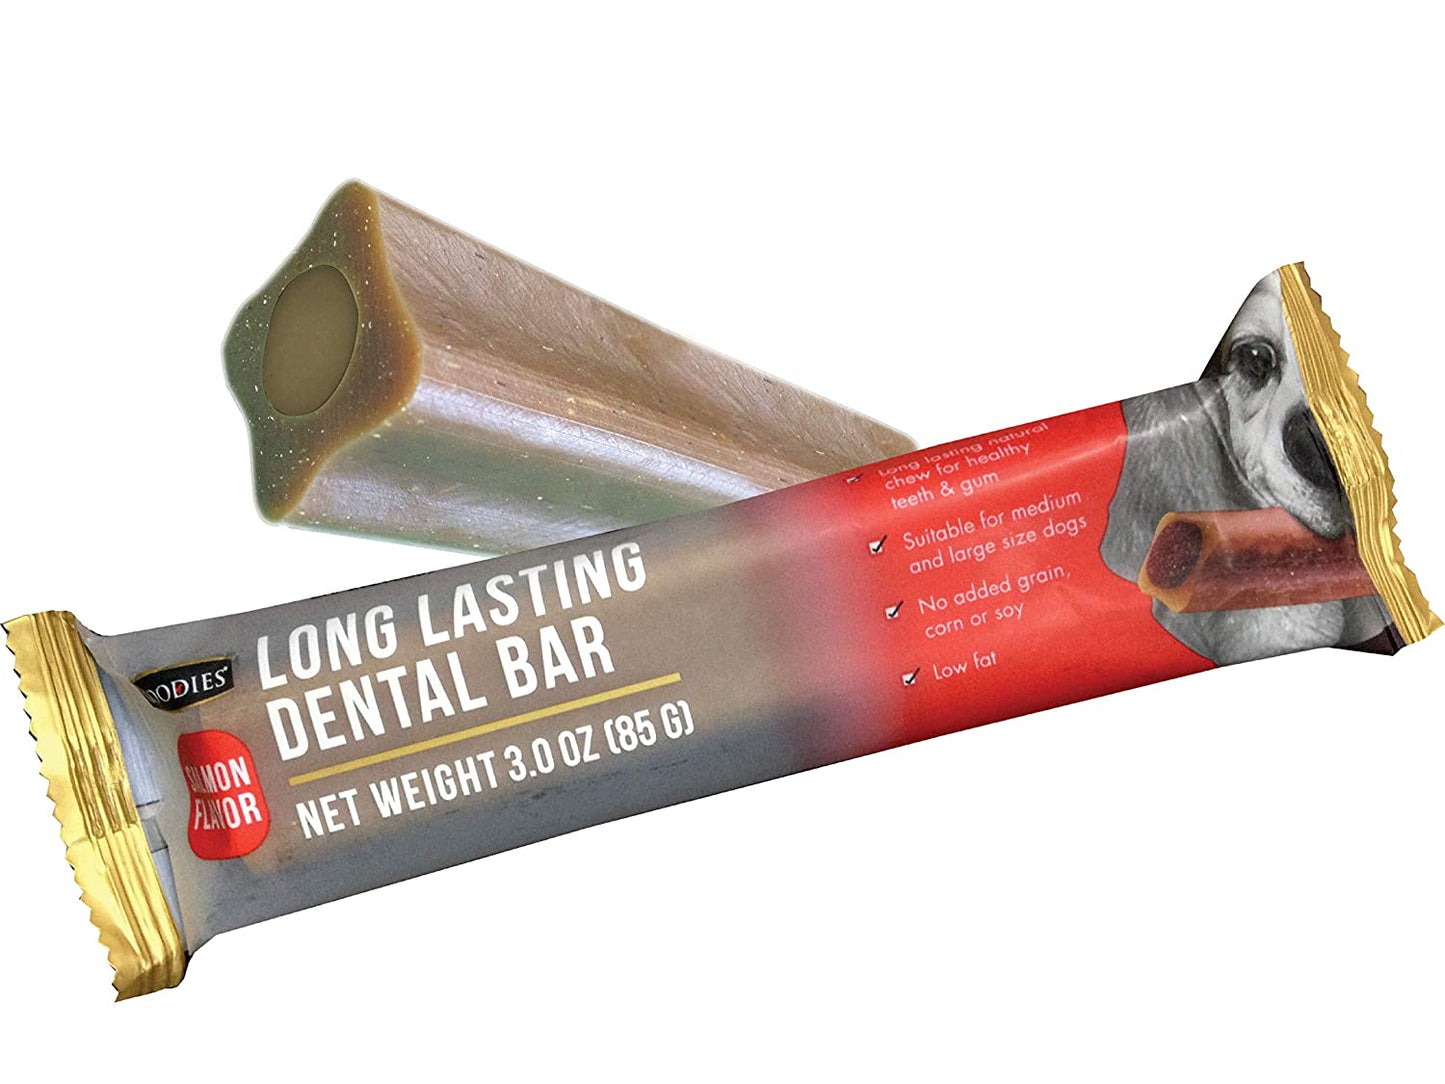 Goodies Long Lasting Dental Bar - Salmon Flavor